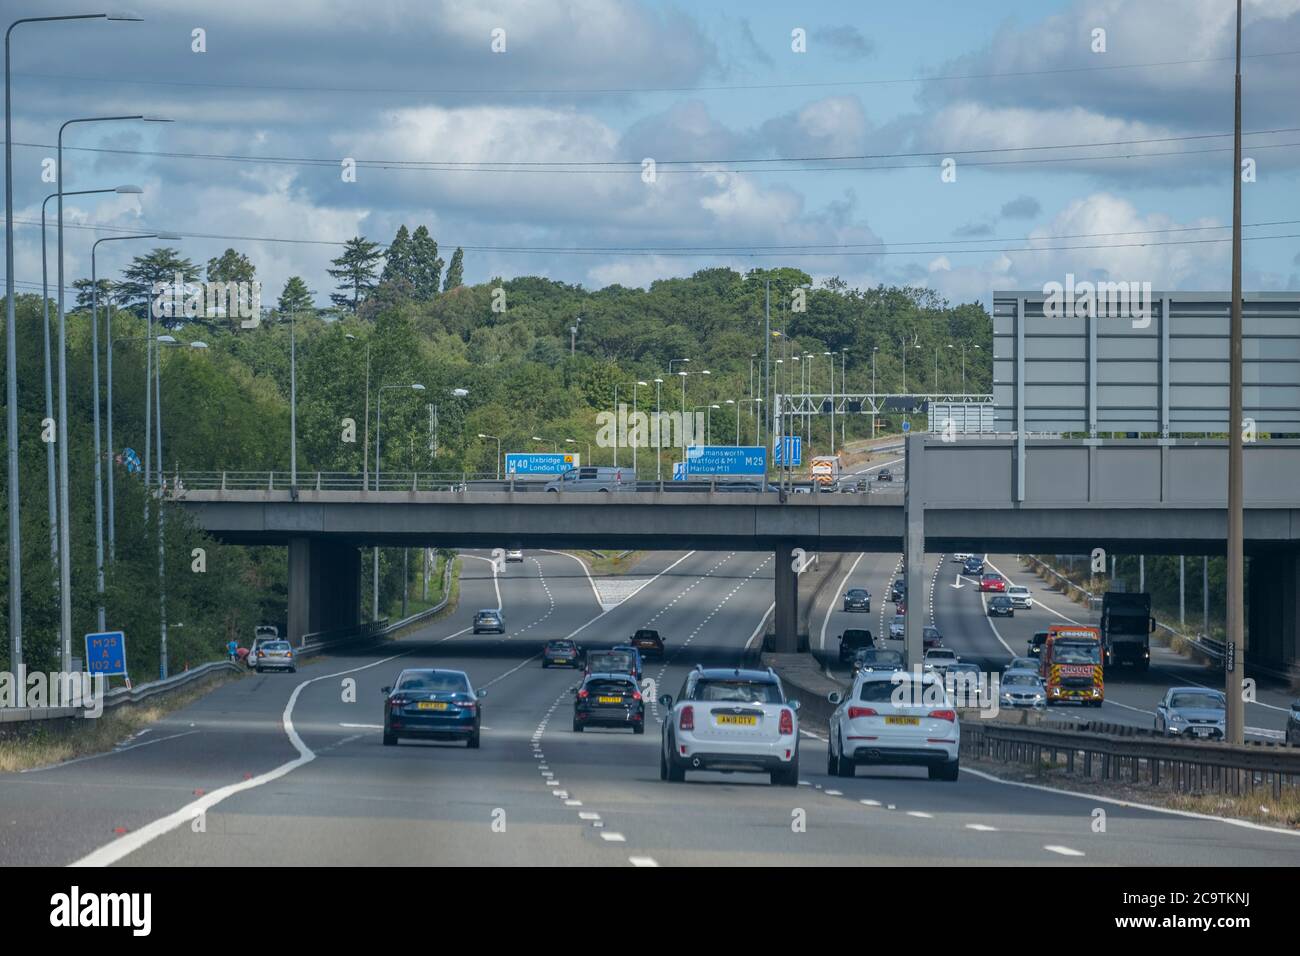 Sunday Traffic on the M25 London Orbital Motorway, 2.8.20 Stock Photo